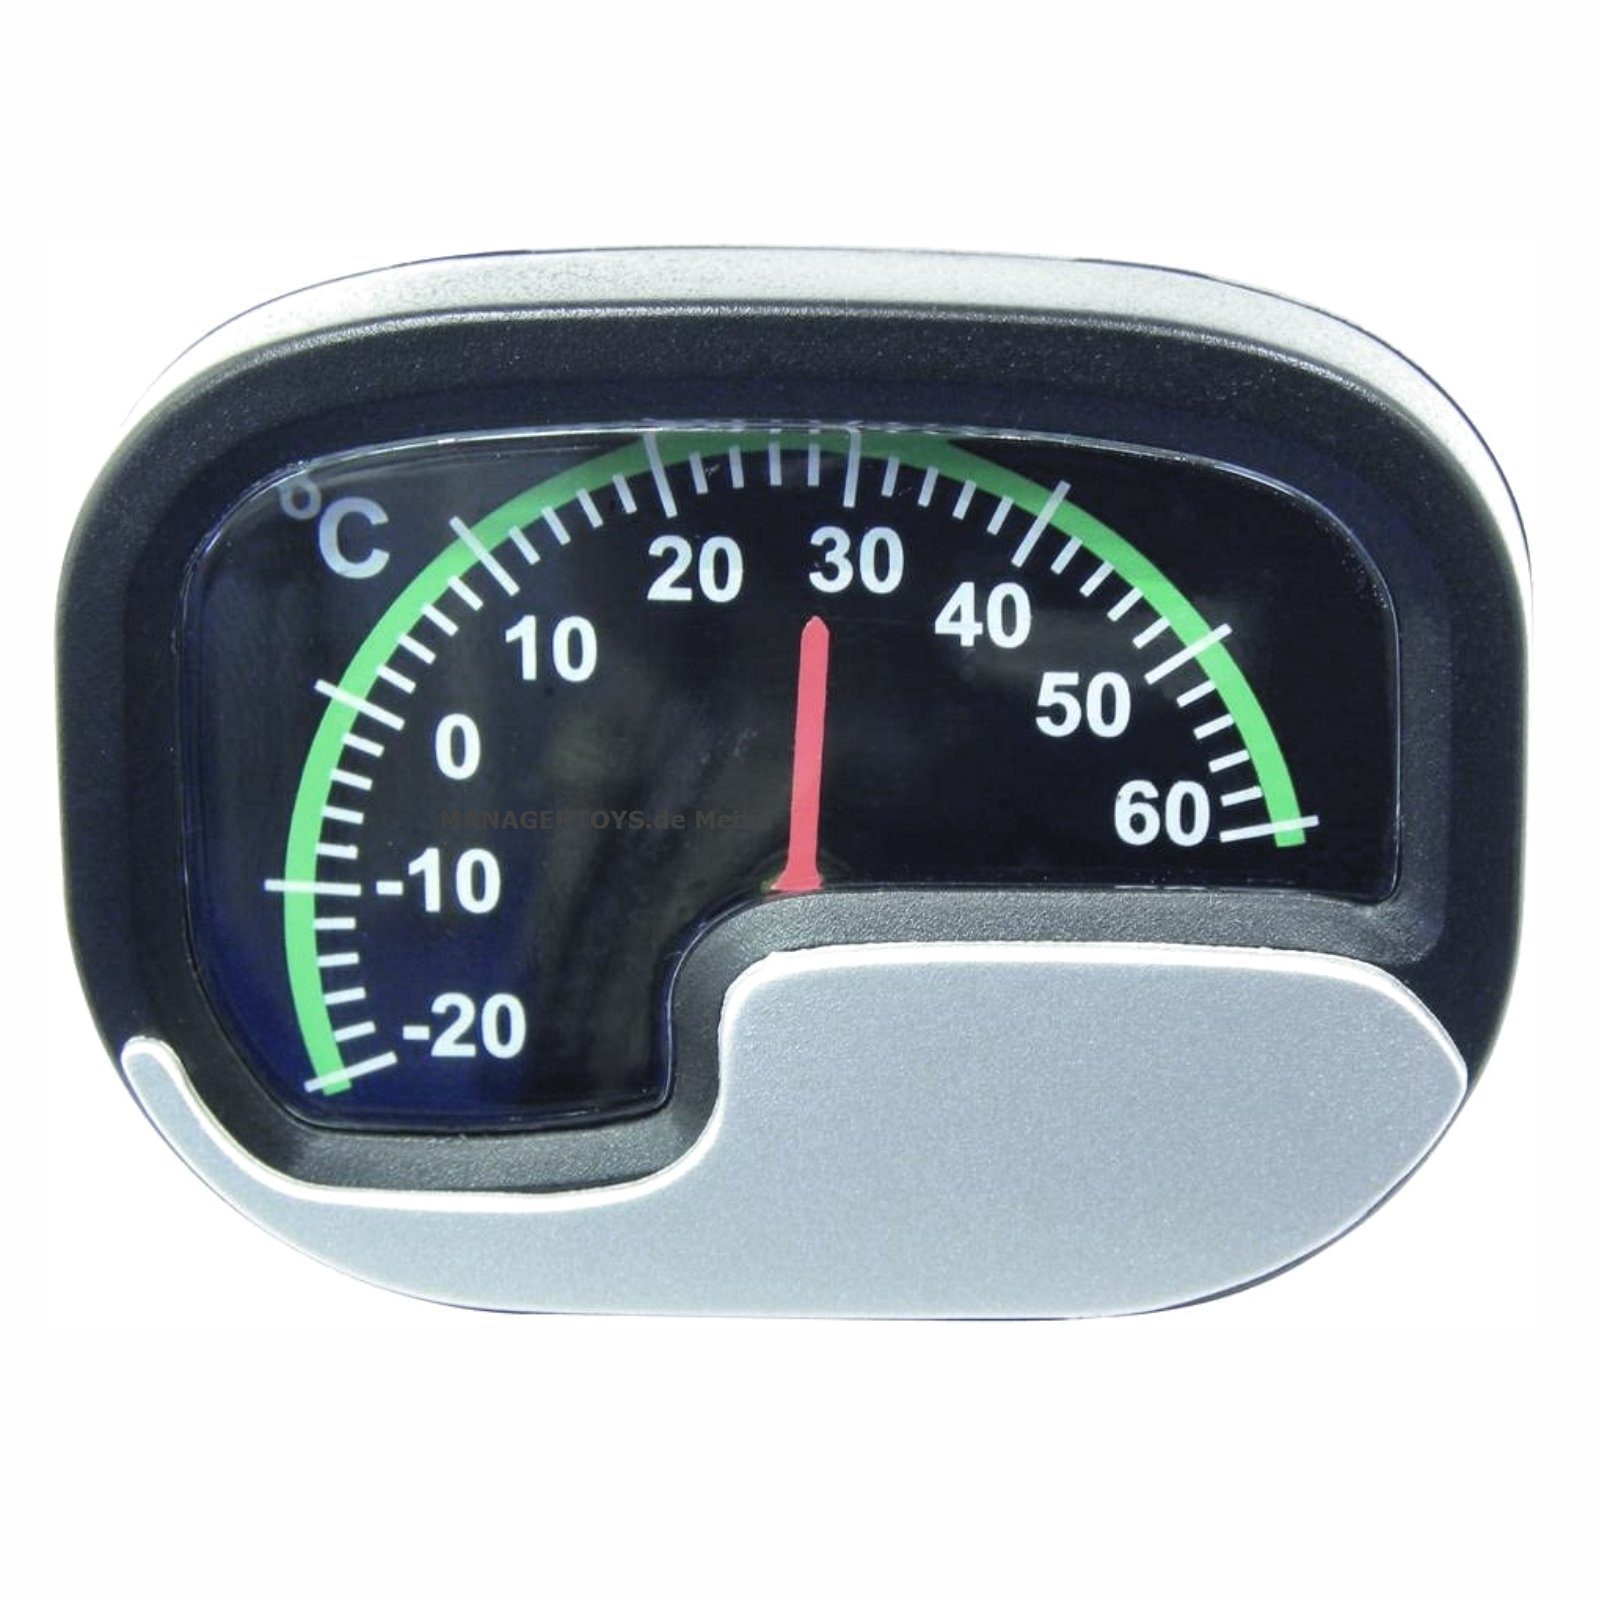 Carpoint Raumthermometer Auto Bimetall Reliefskala Thermometer